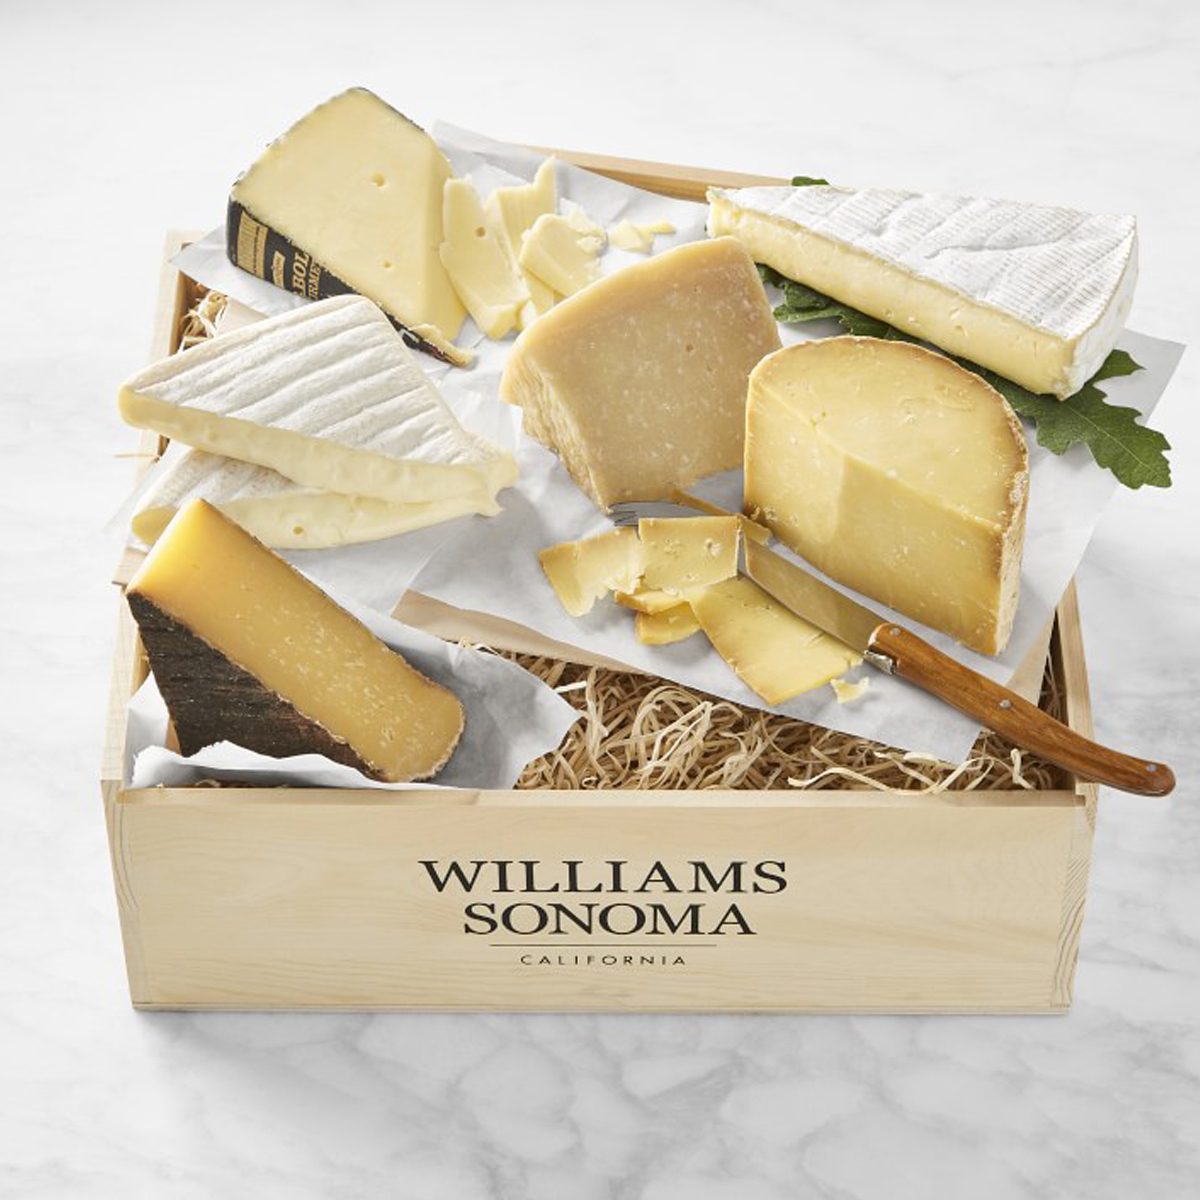 Williams Sonoma Deluxe European Cheese Crate Ecomm Williams Sonoma.com